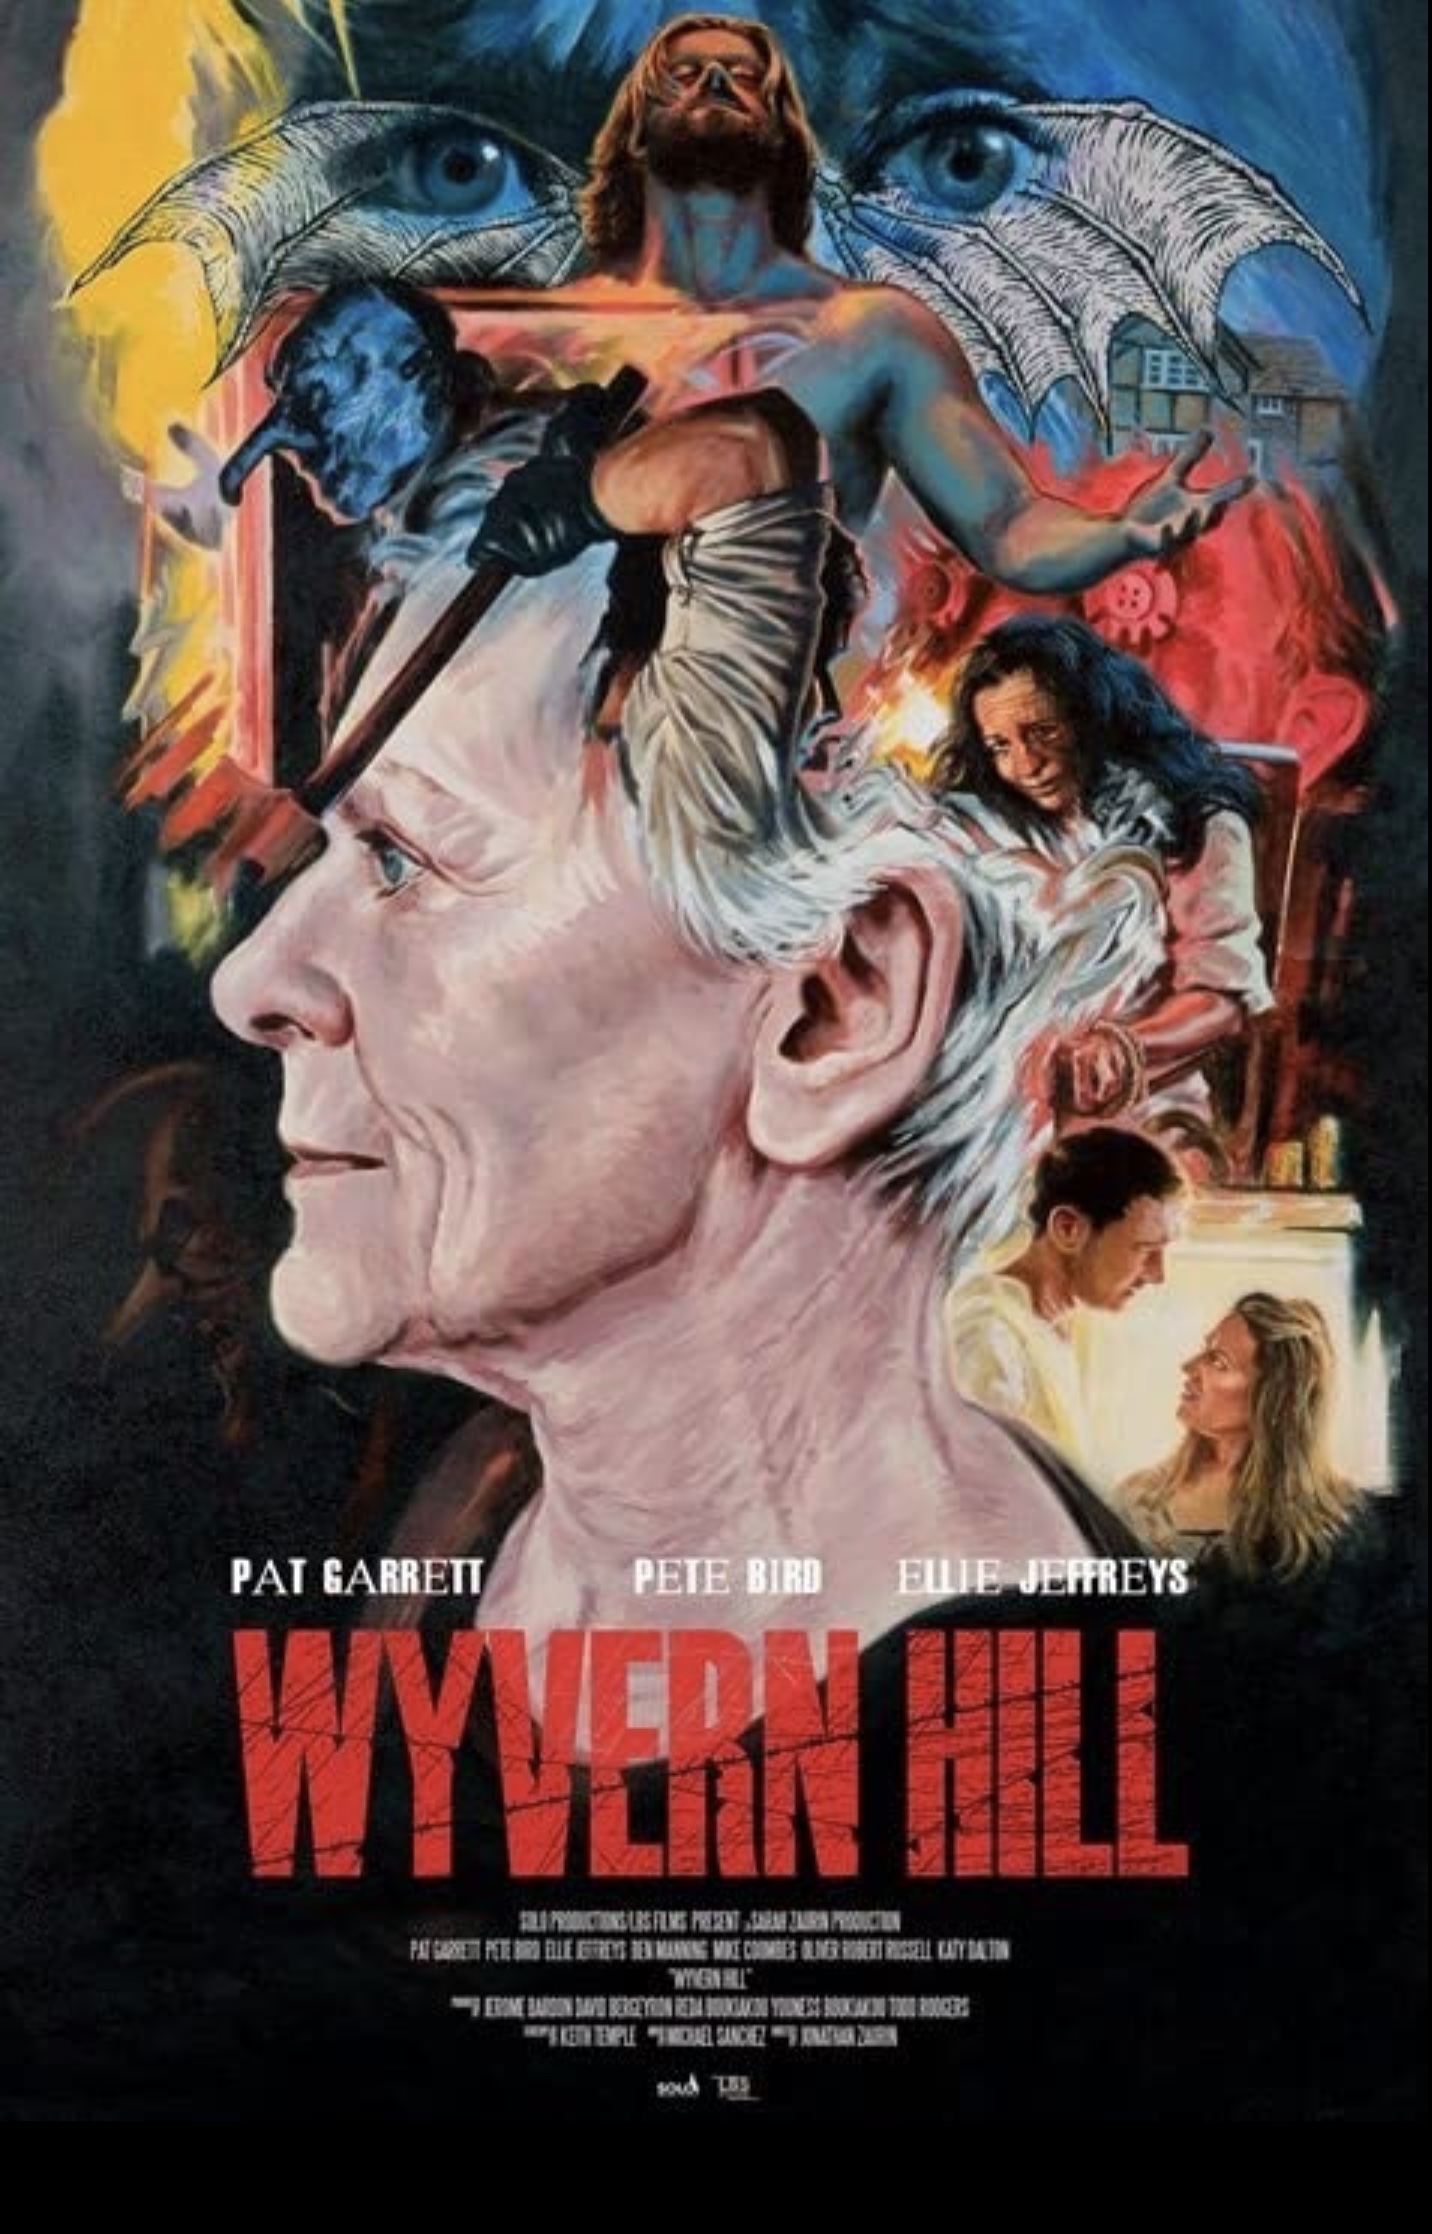 WYVERN HILL (2021) Vista previa de la película británica sobre un asesino en serie